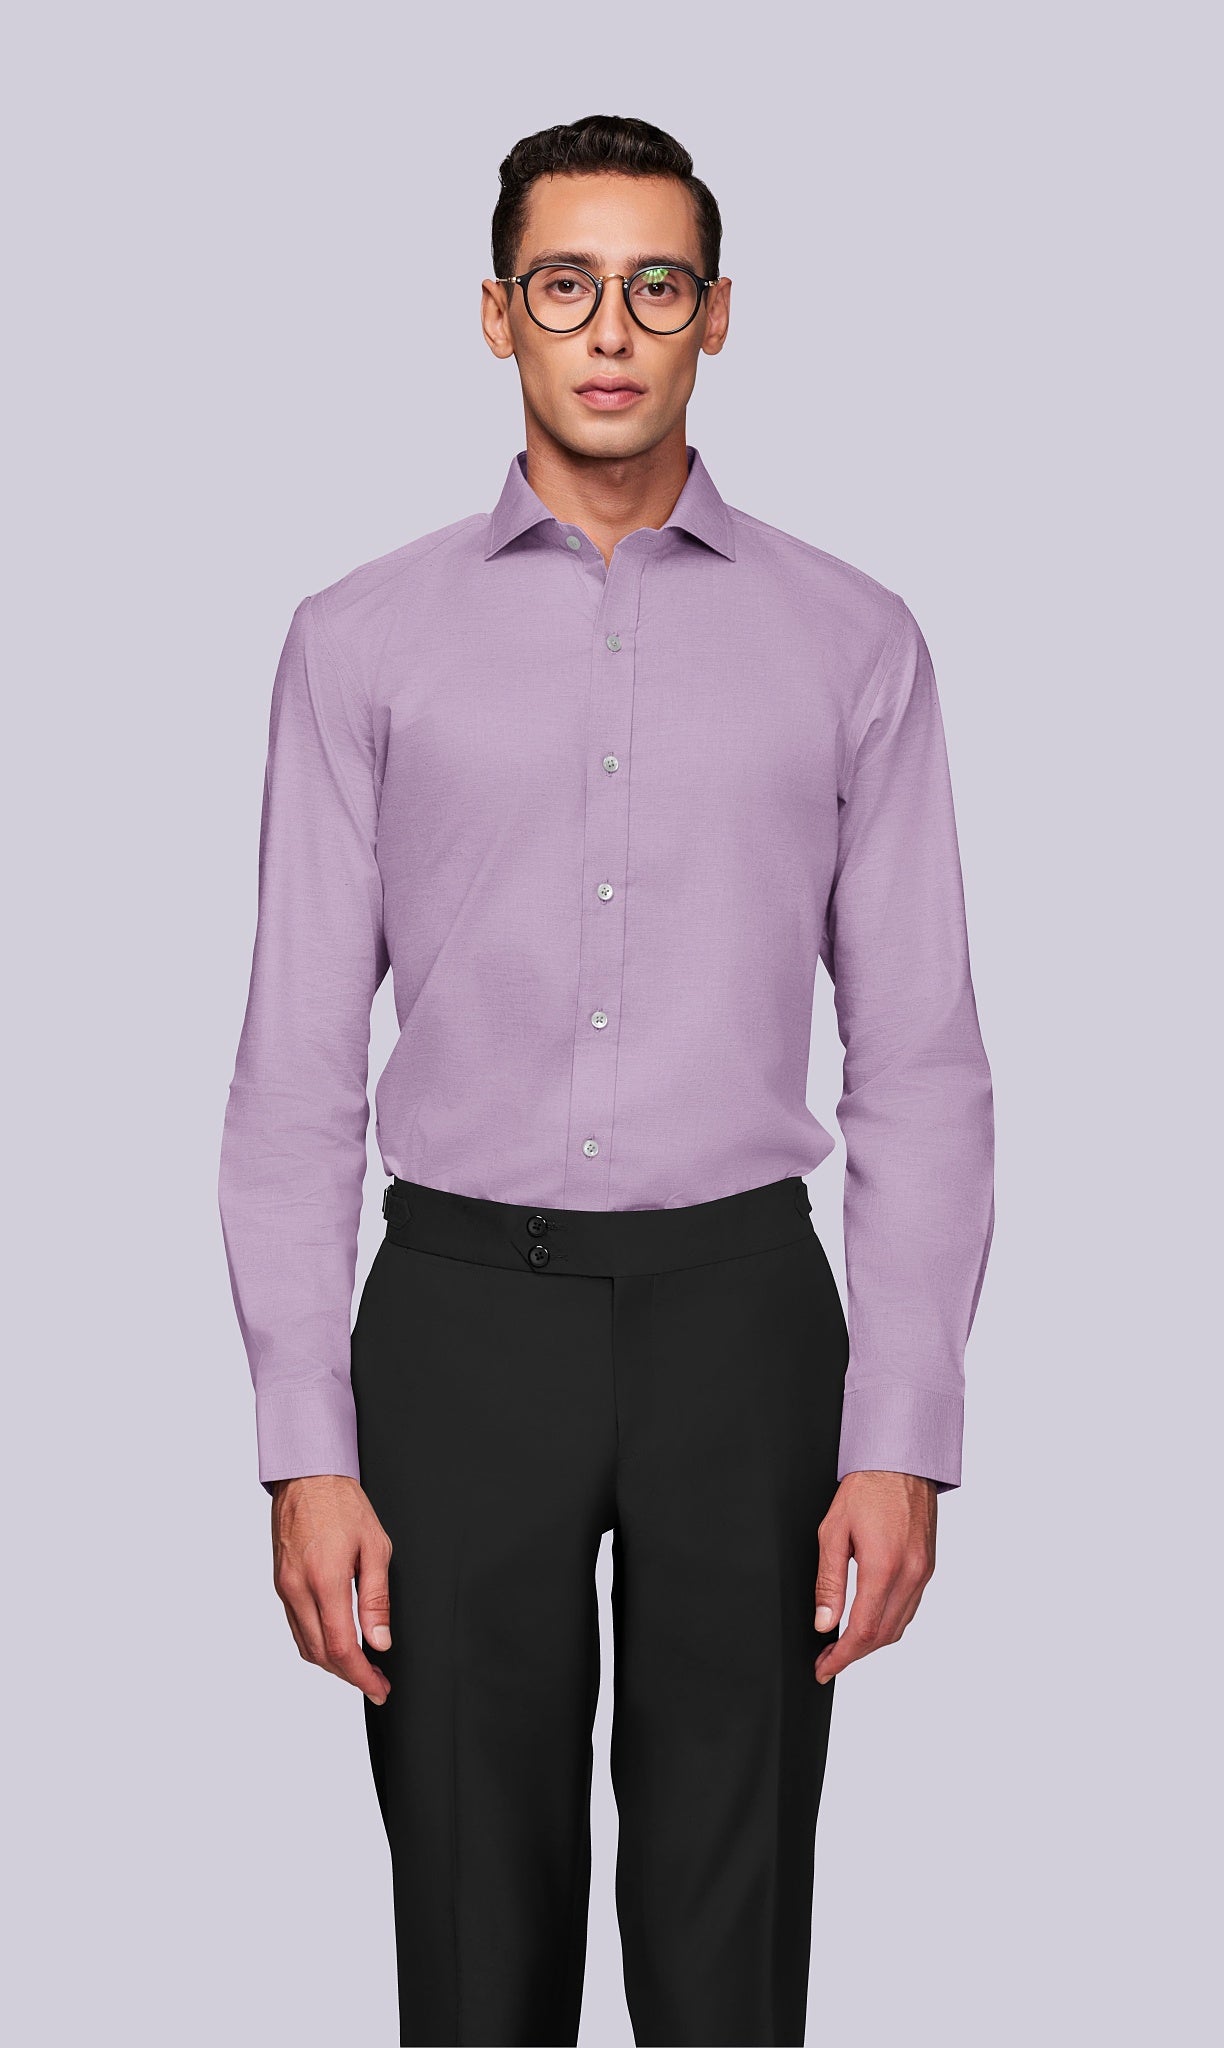 Men's Lavender shirt